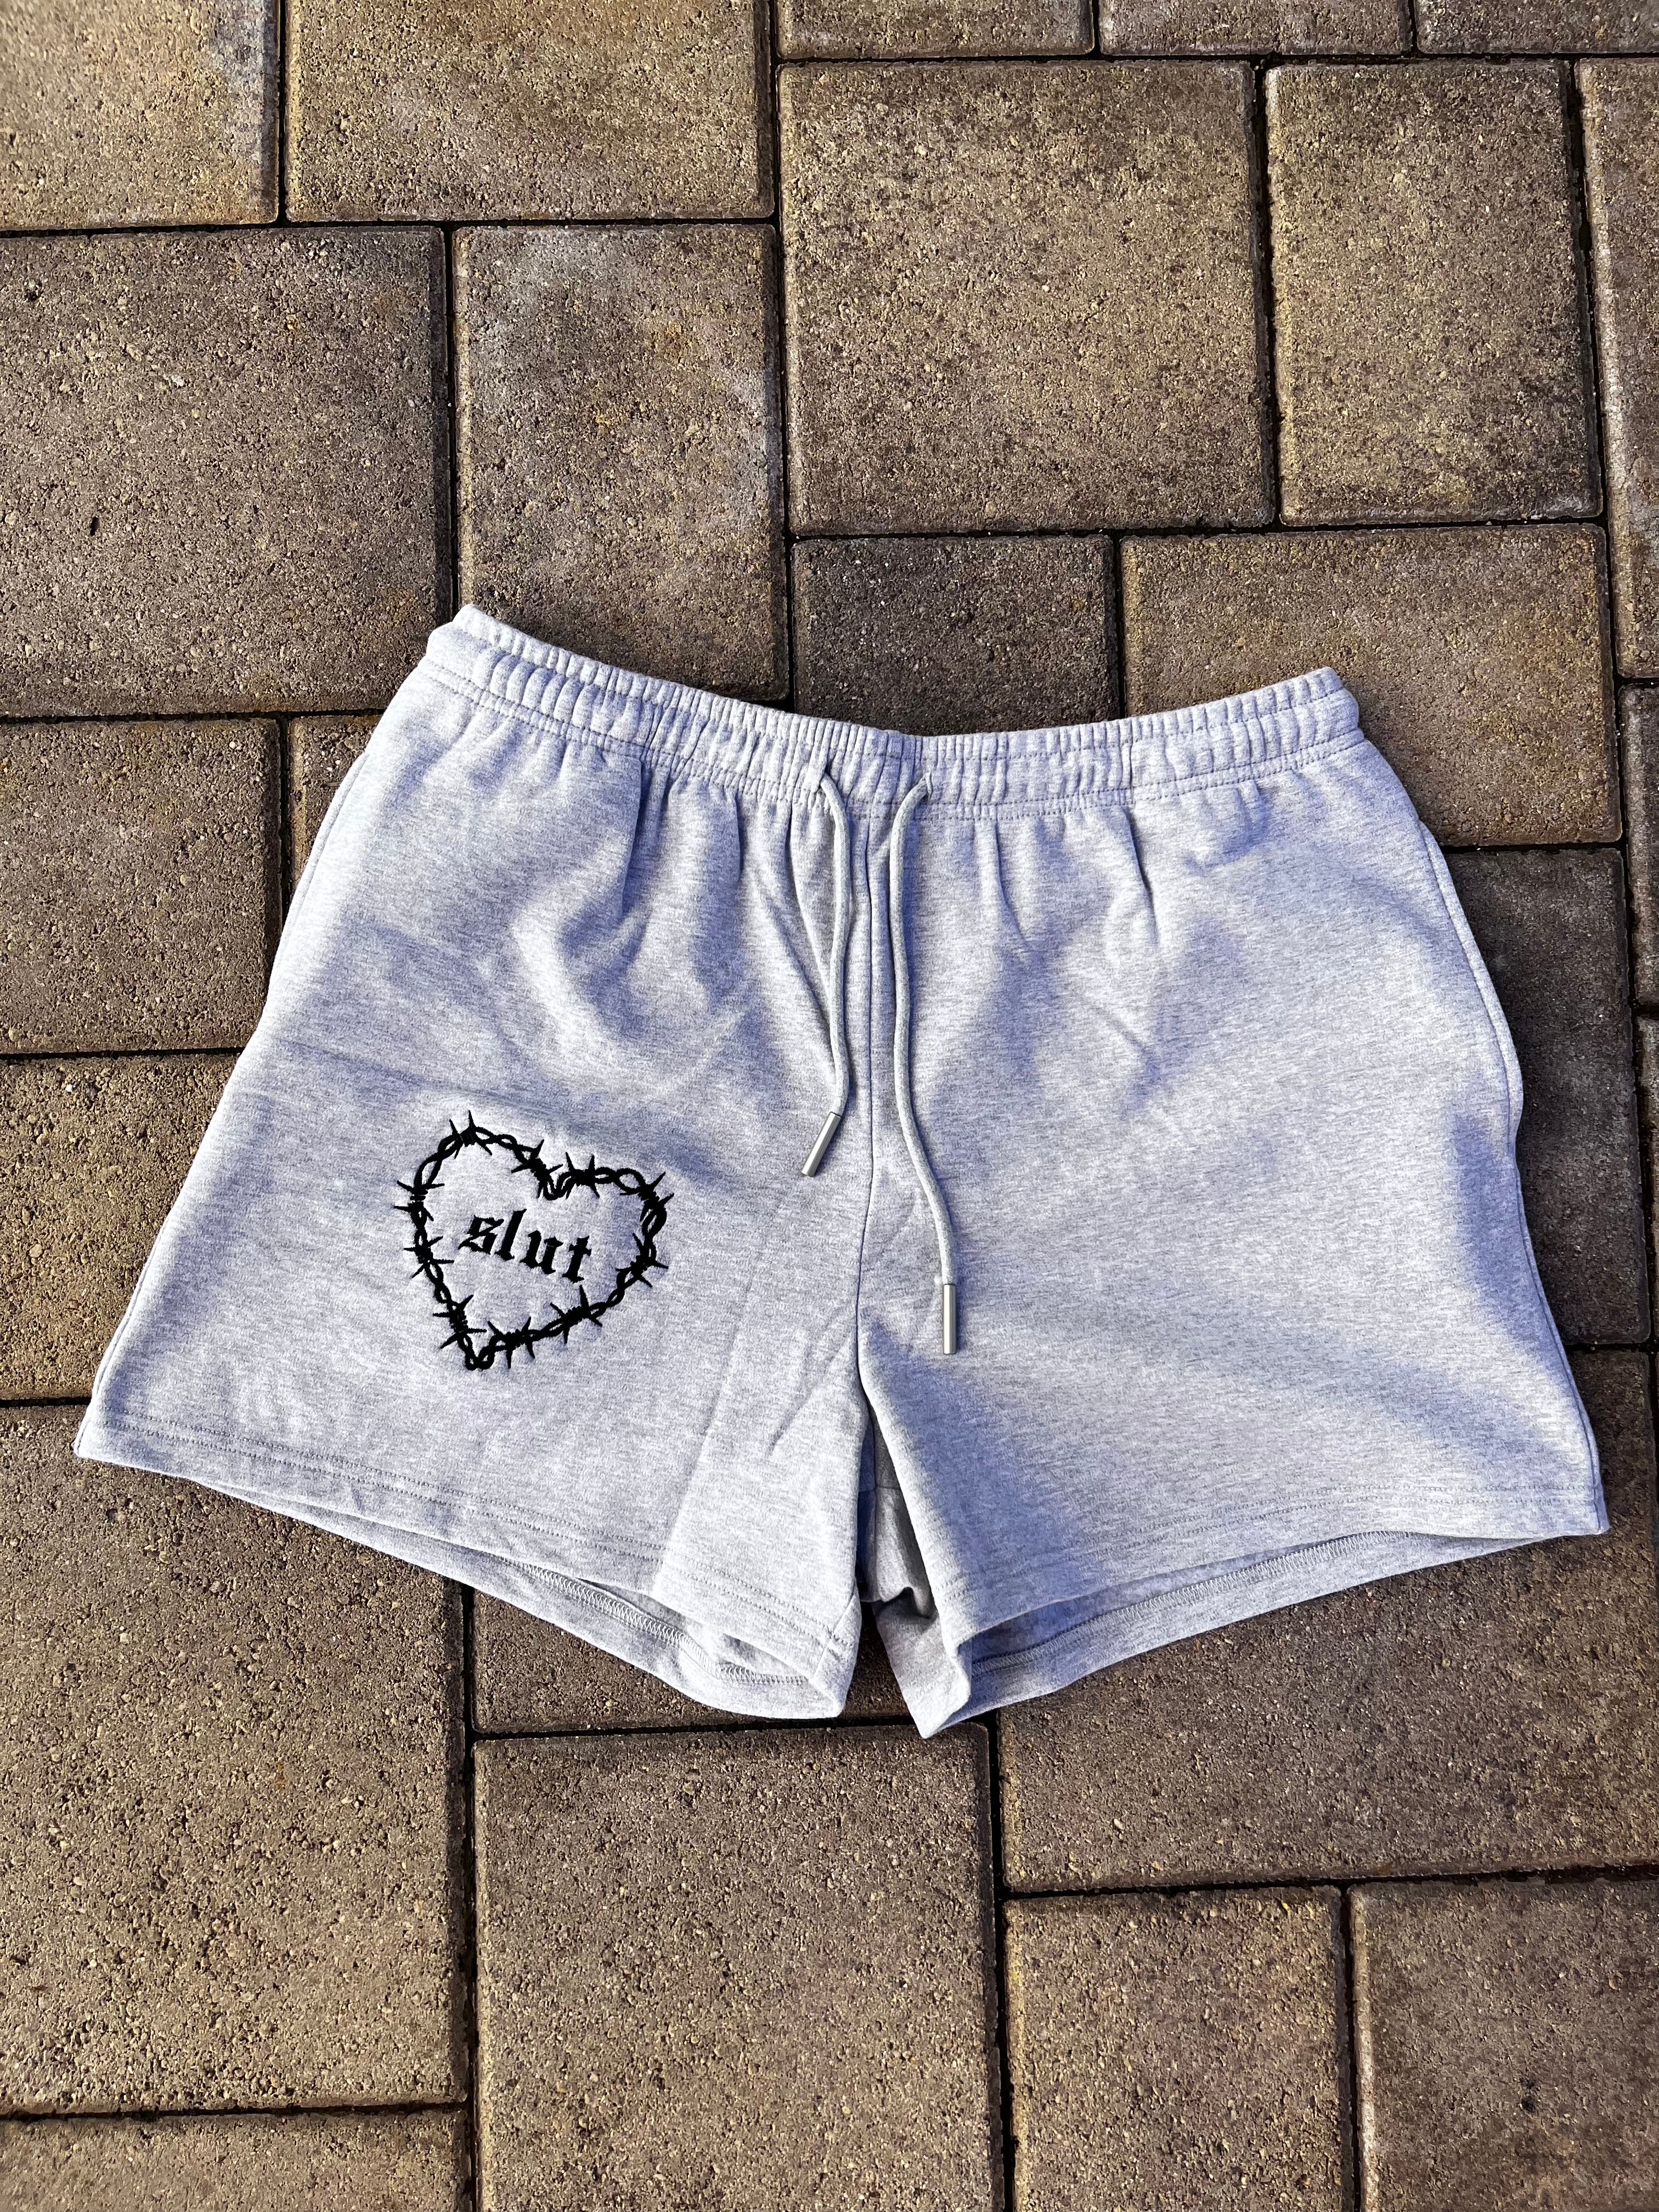 david moehlman recommends slut in short shorts pic